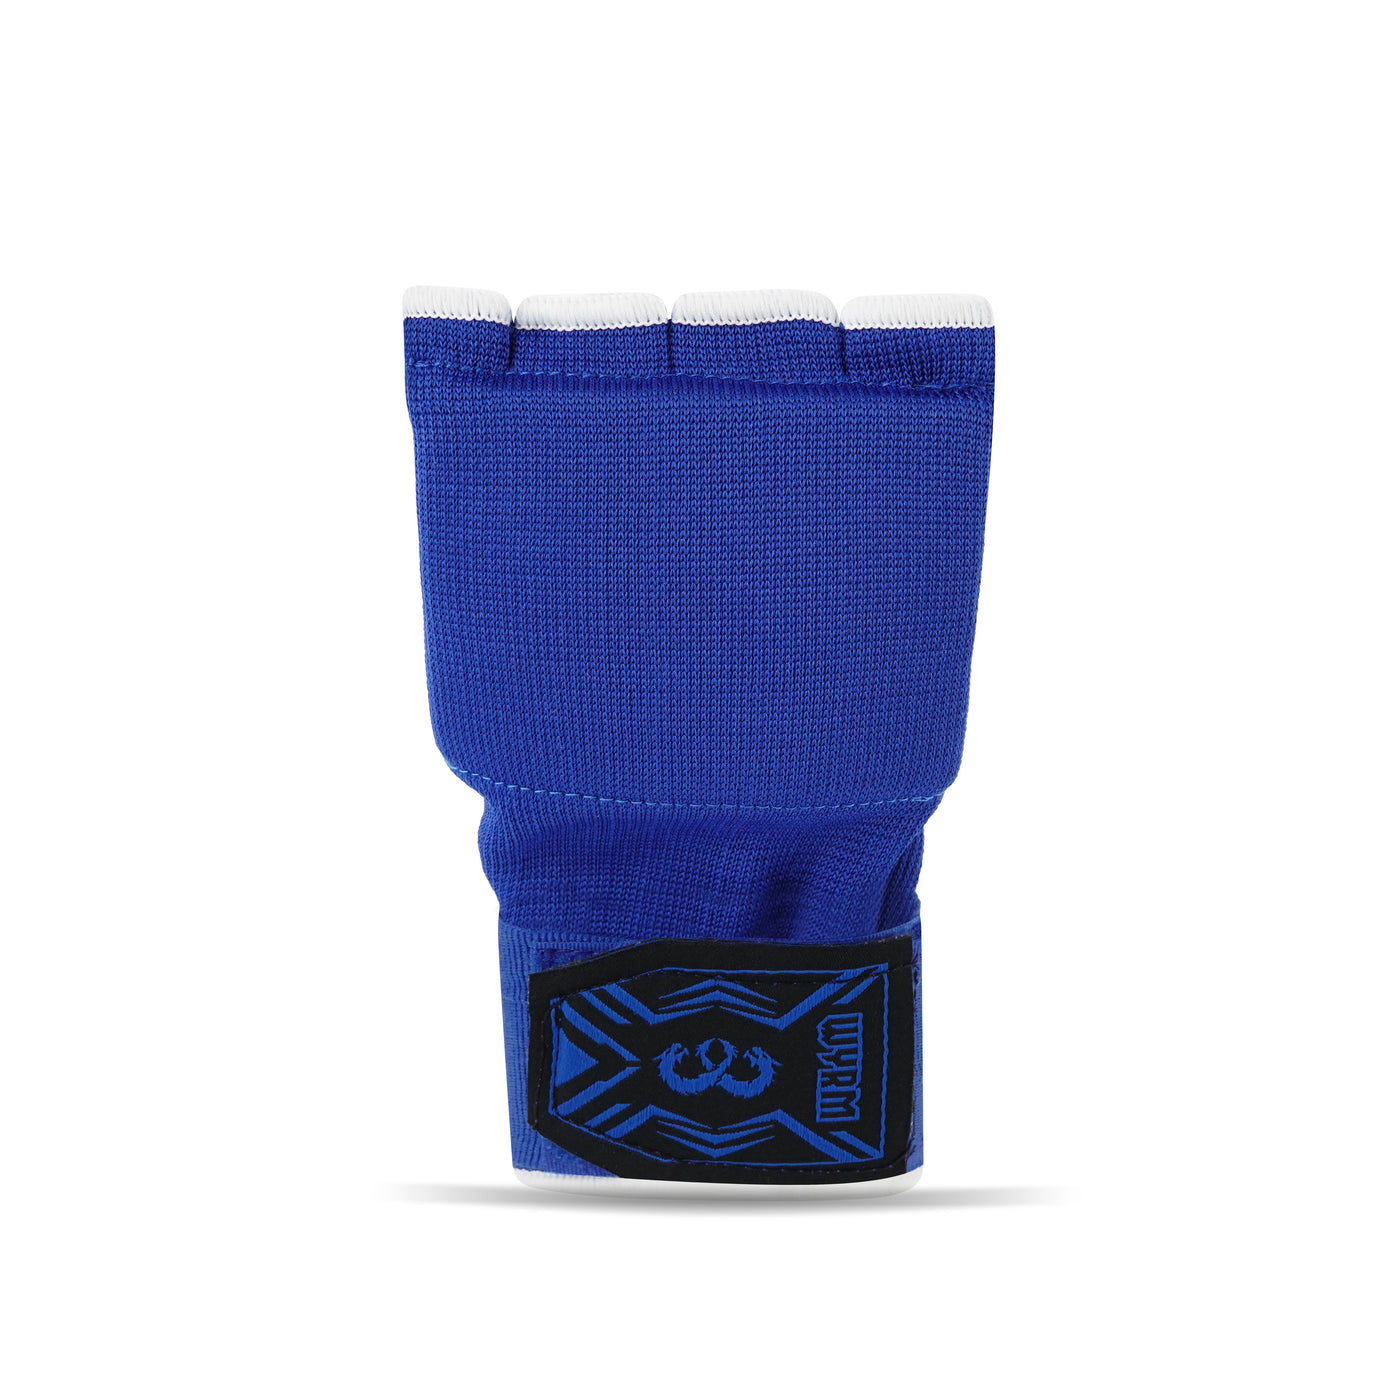 Blue Inner Gel Gloves With Strap